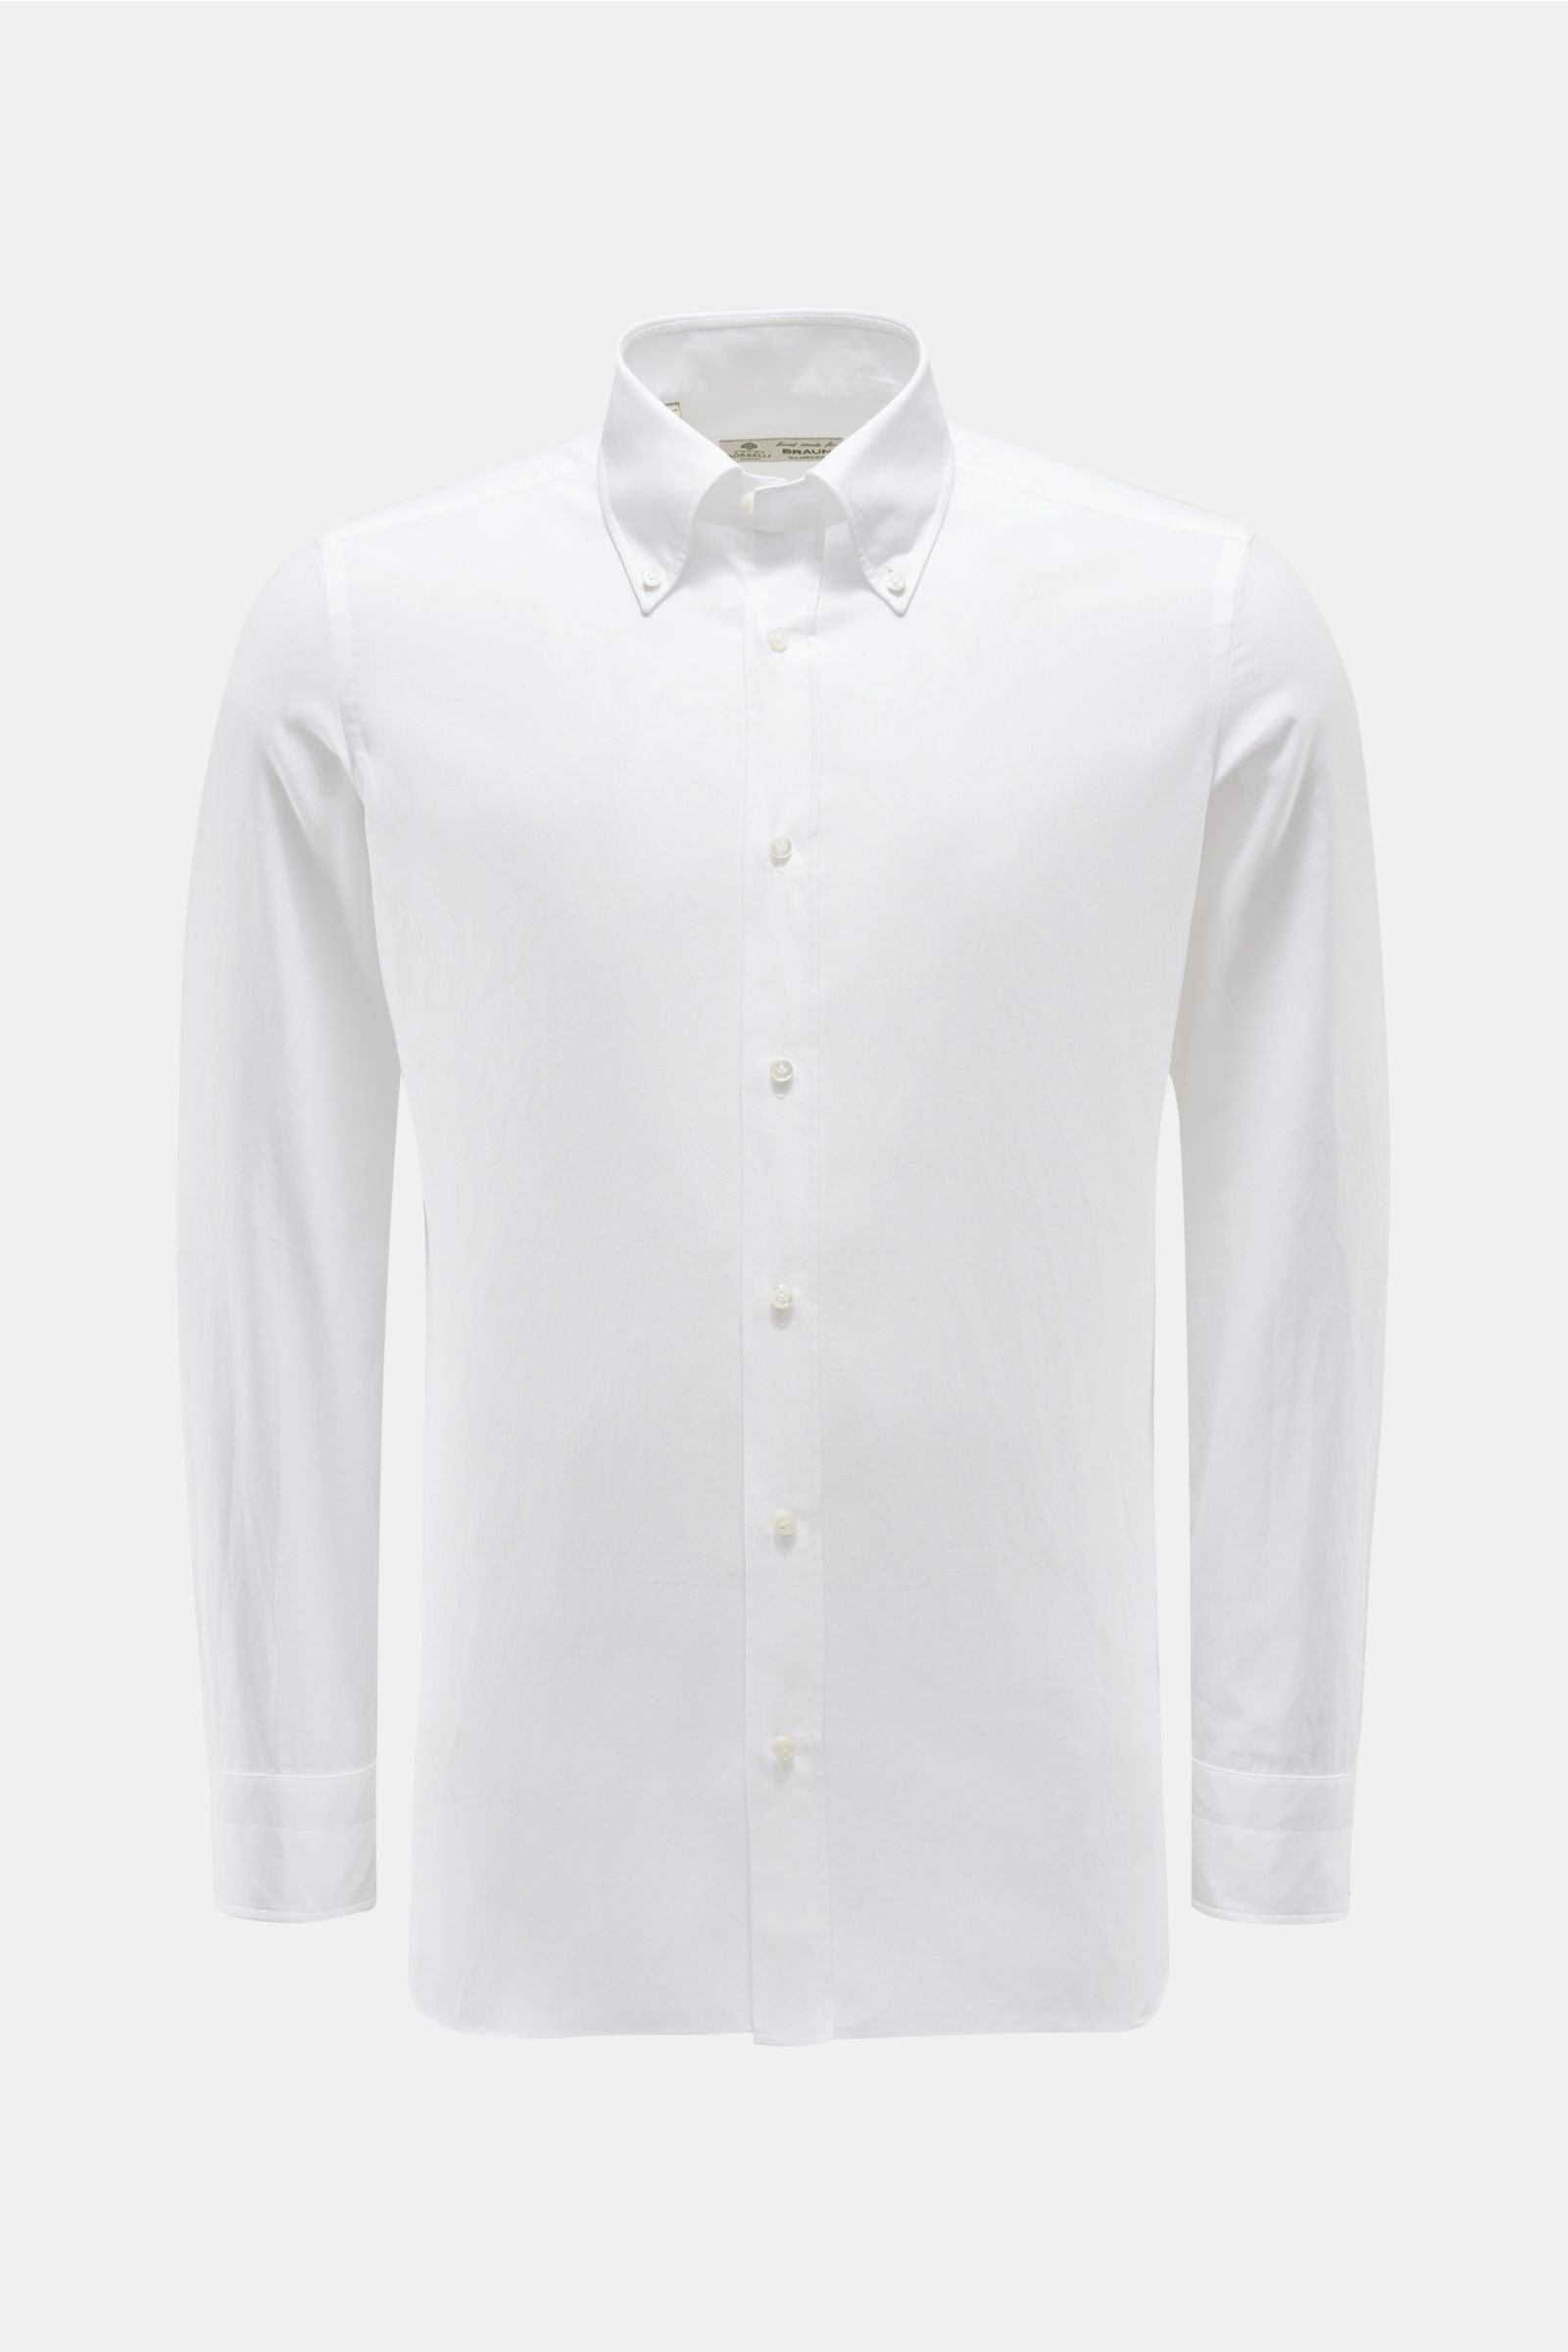 Piqué shirt button-down collar white